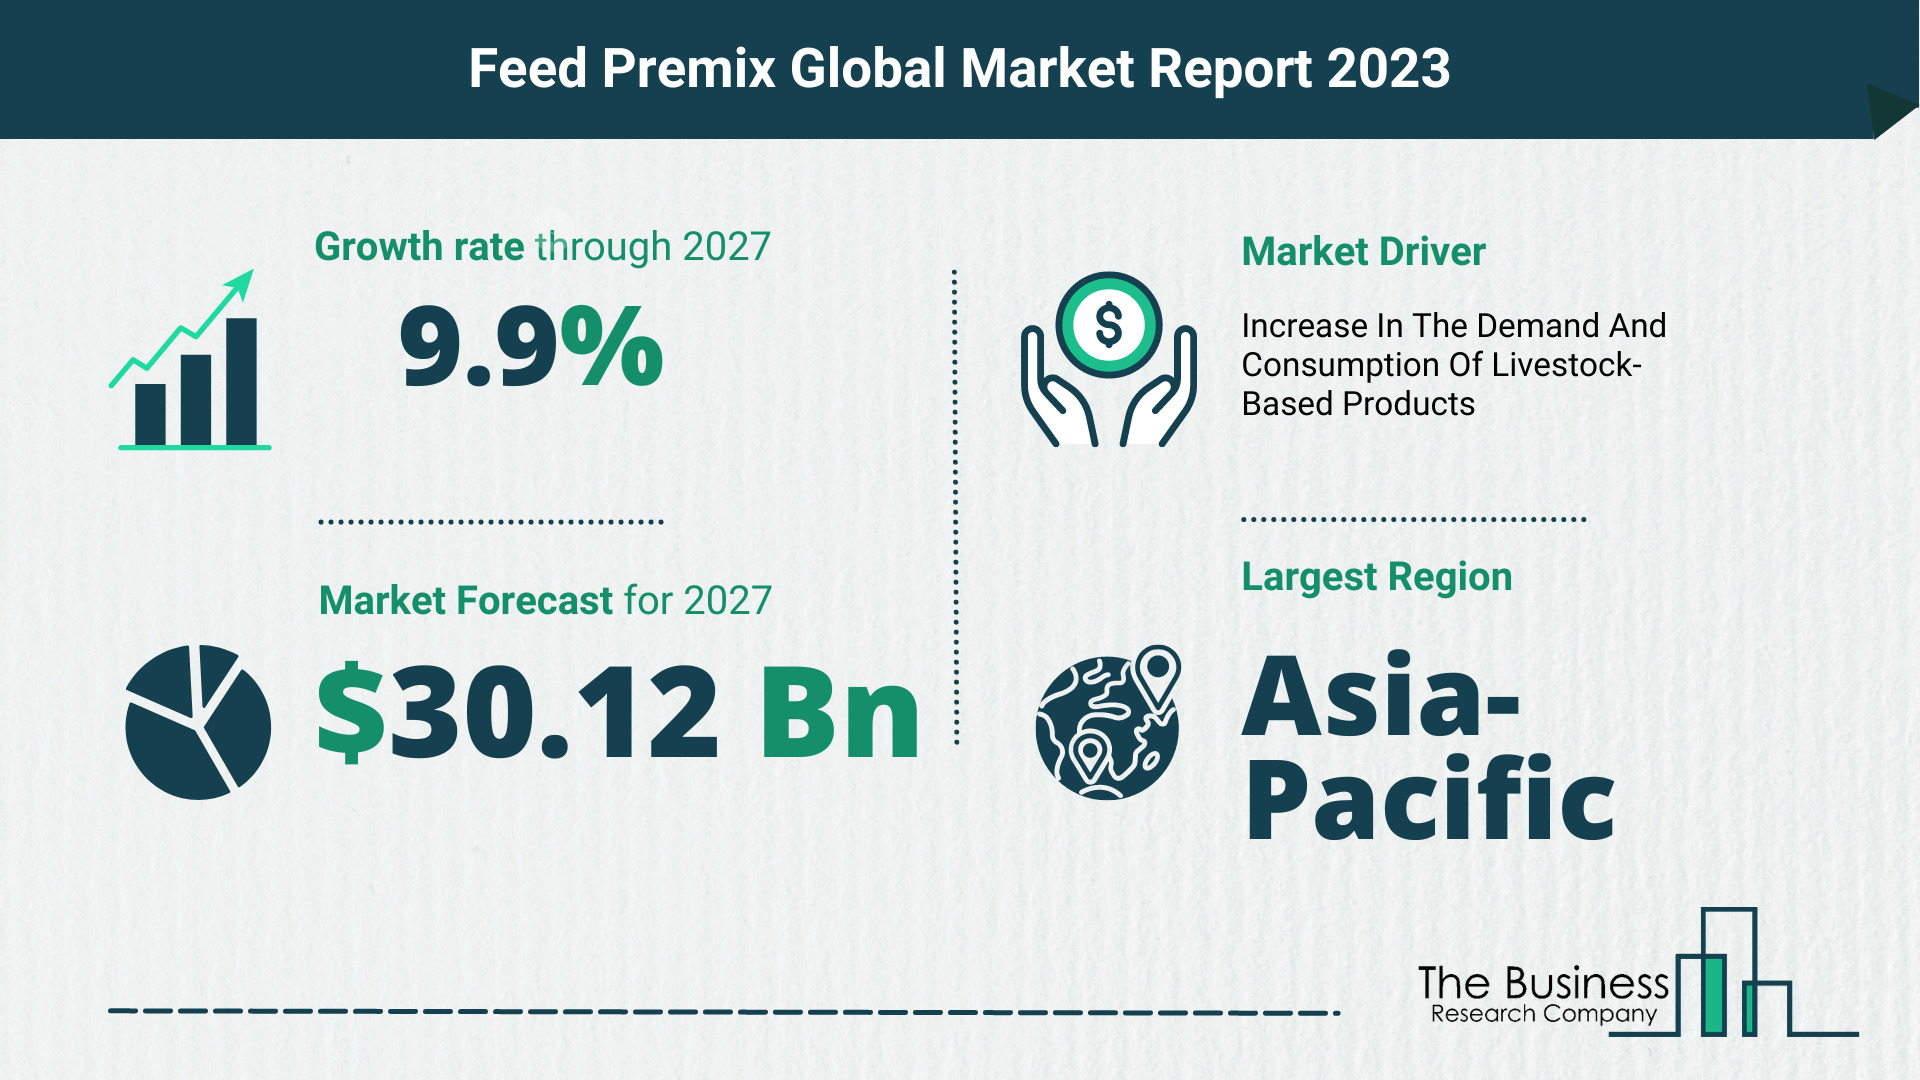 Global Feed Premix Market